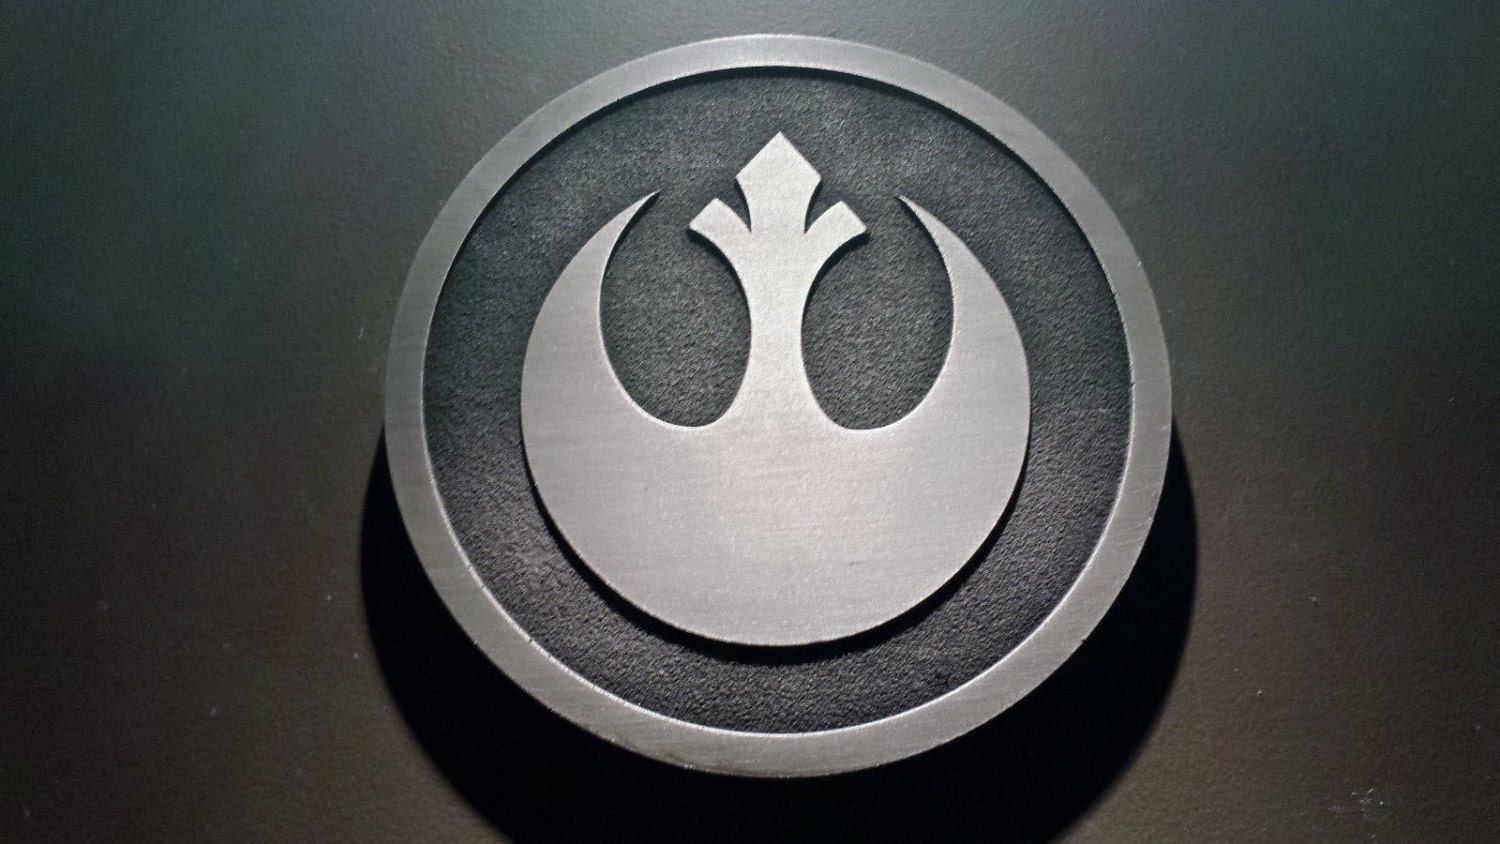 Plasma cut Star Wars  Rebel logo key tag metal mancave/Wall Decor 